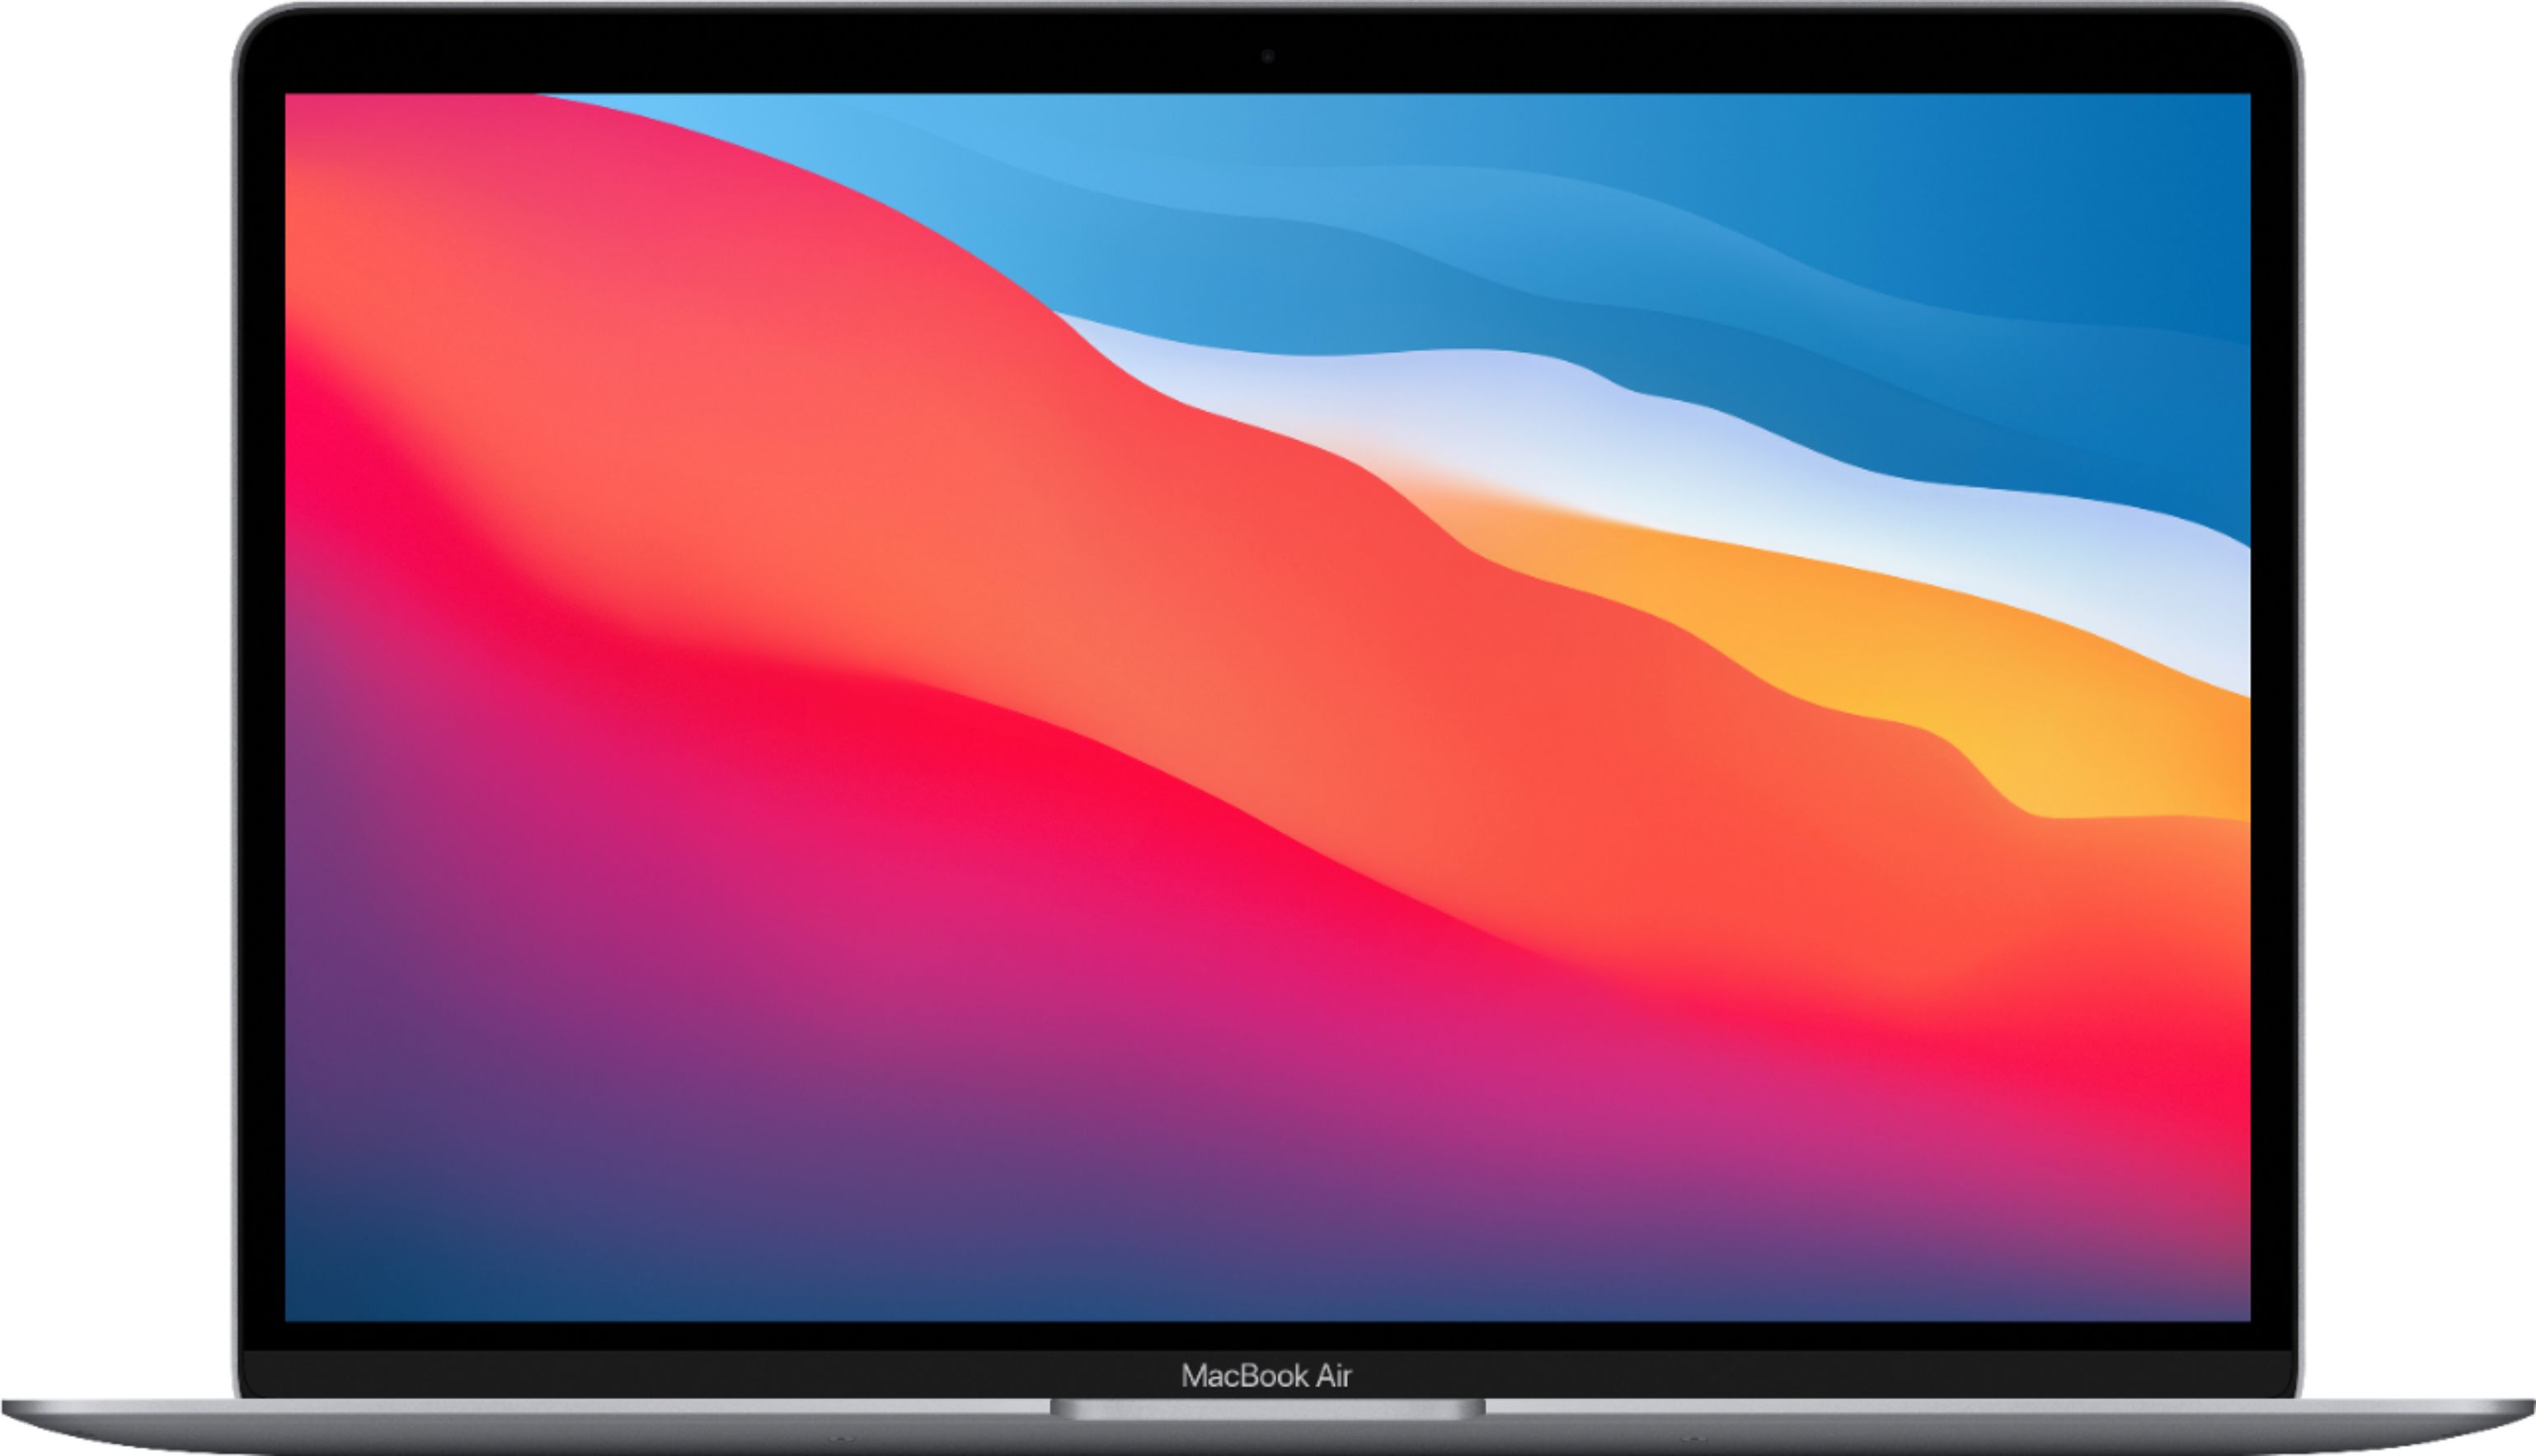 Apple m1 macbook air sale reddit moment